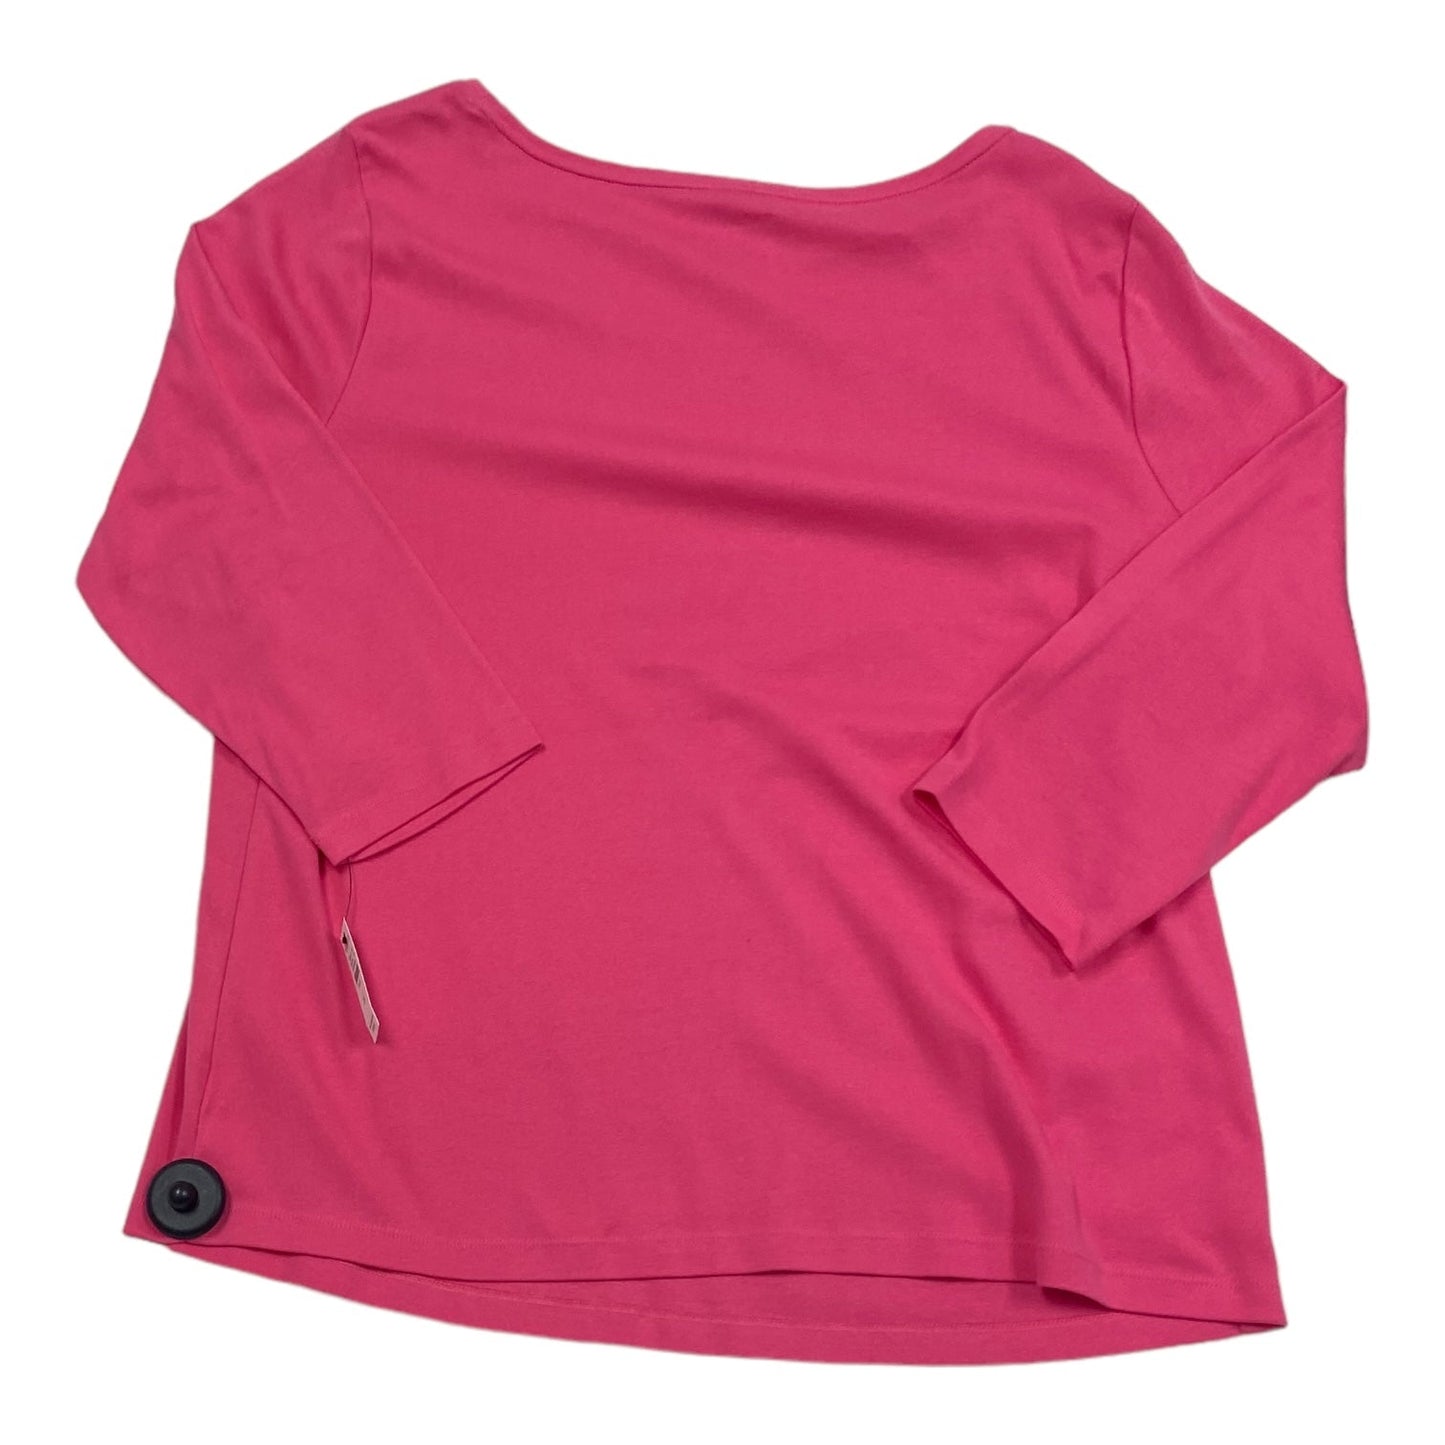 Pink Top Long Sleeve Basic Talbots, Size 2x